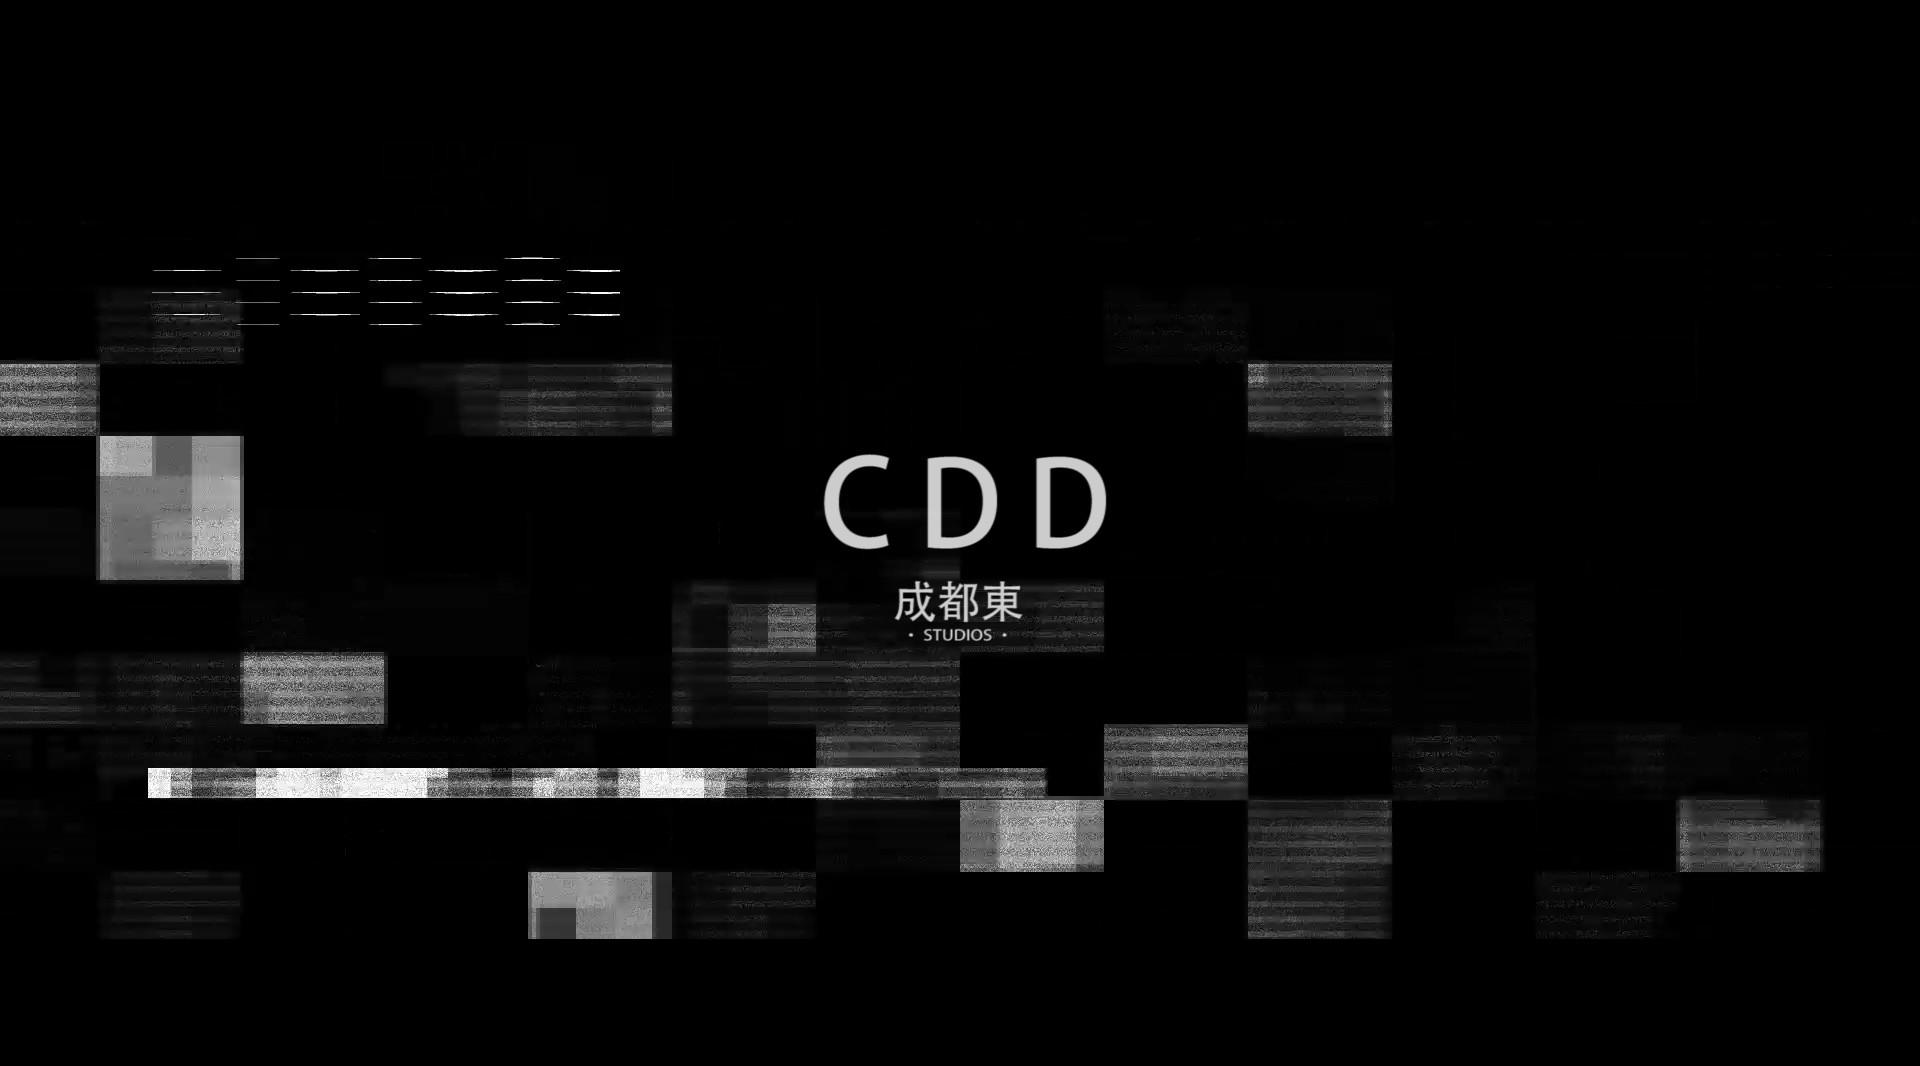 CDD 创作系列  制作花絮